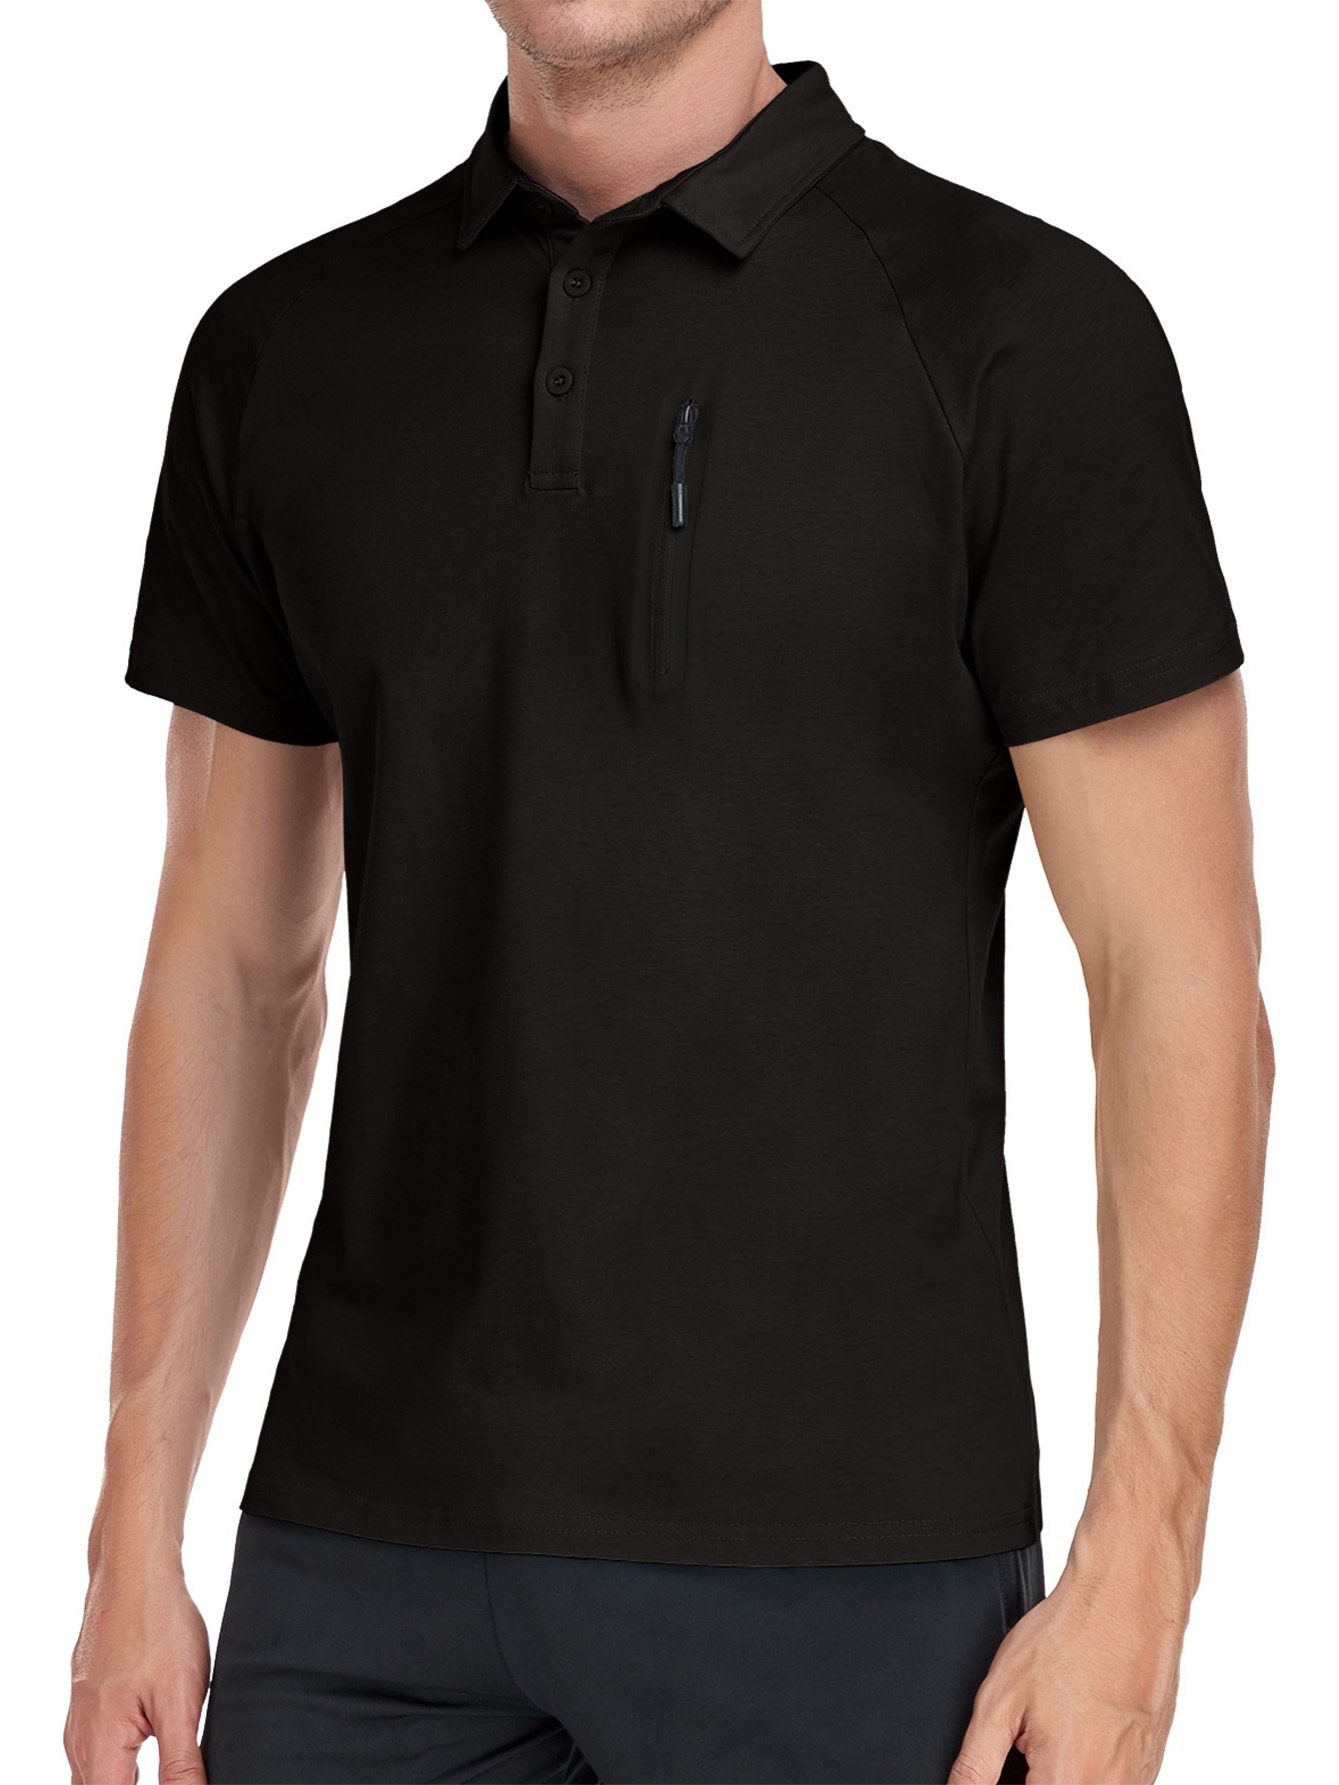 Polo de manga corta para hombre, camisa de golf, camisa de bloque de color,  con cremallera, polos de ajuste delgado